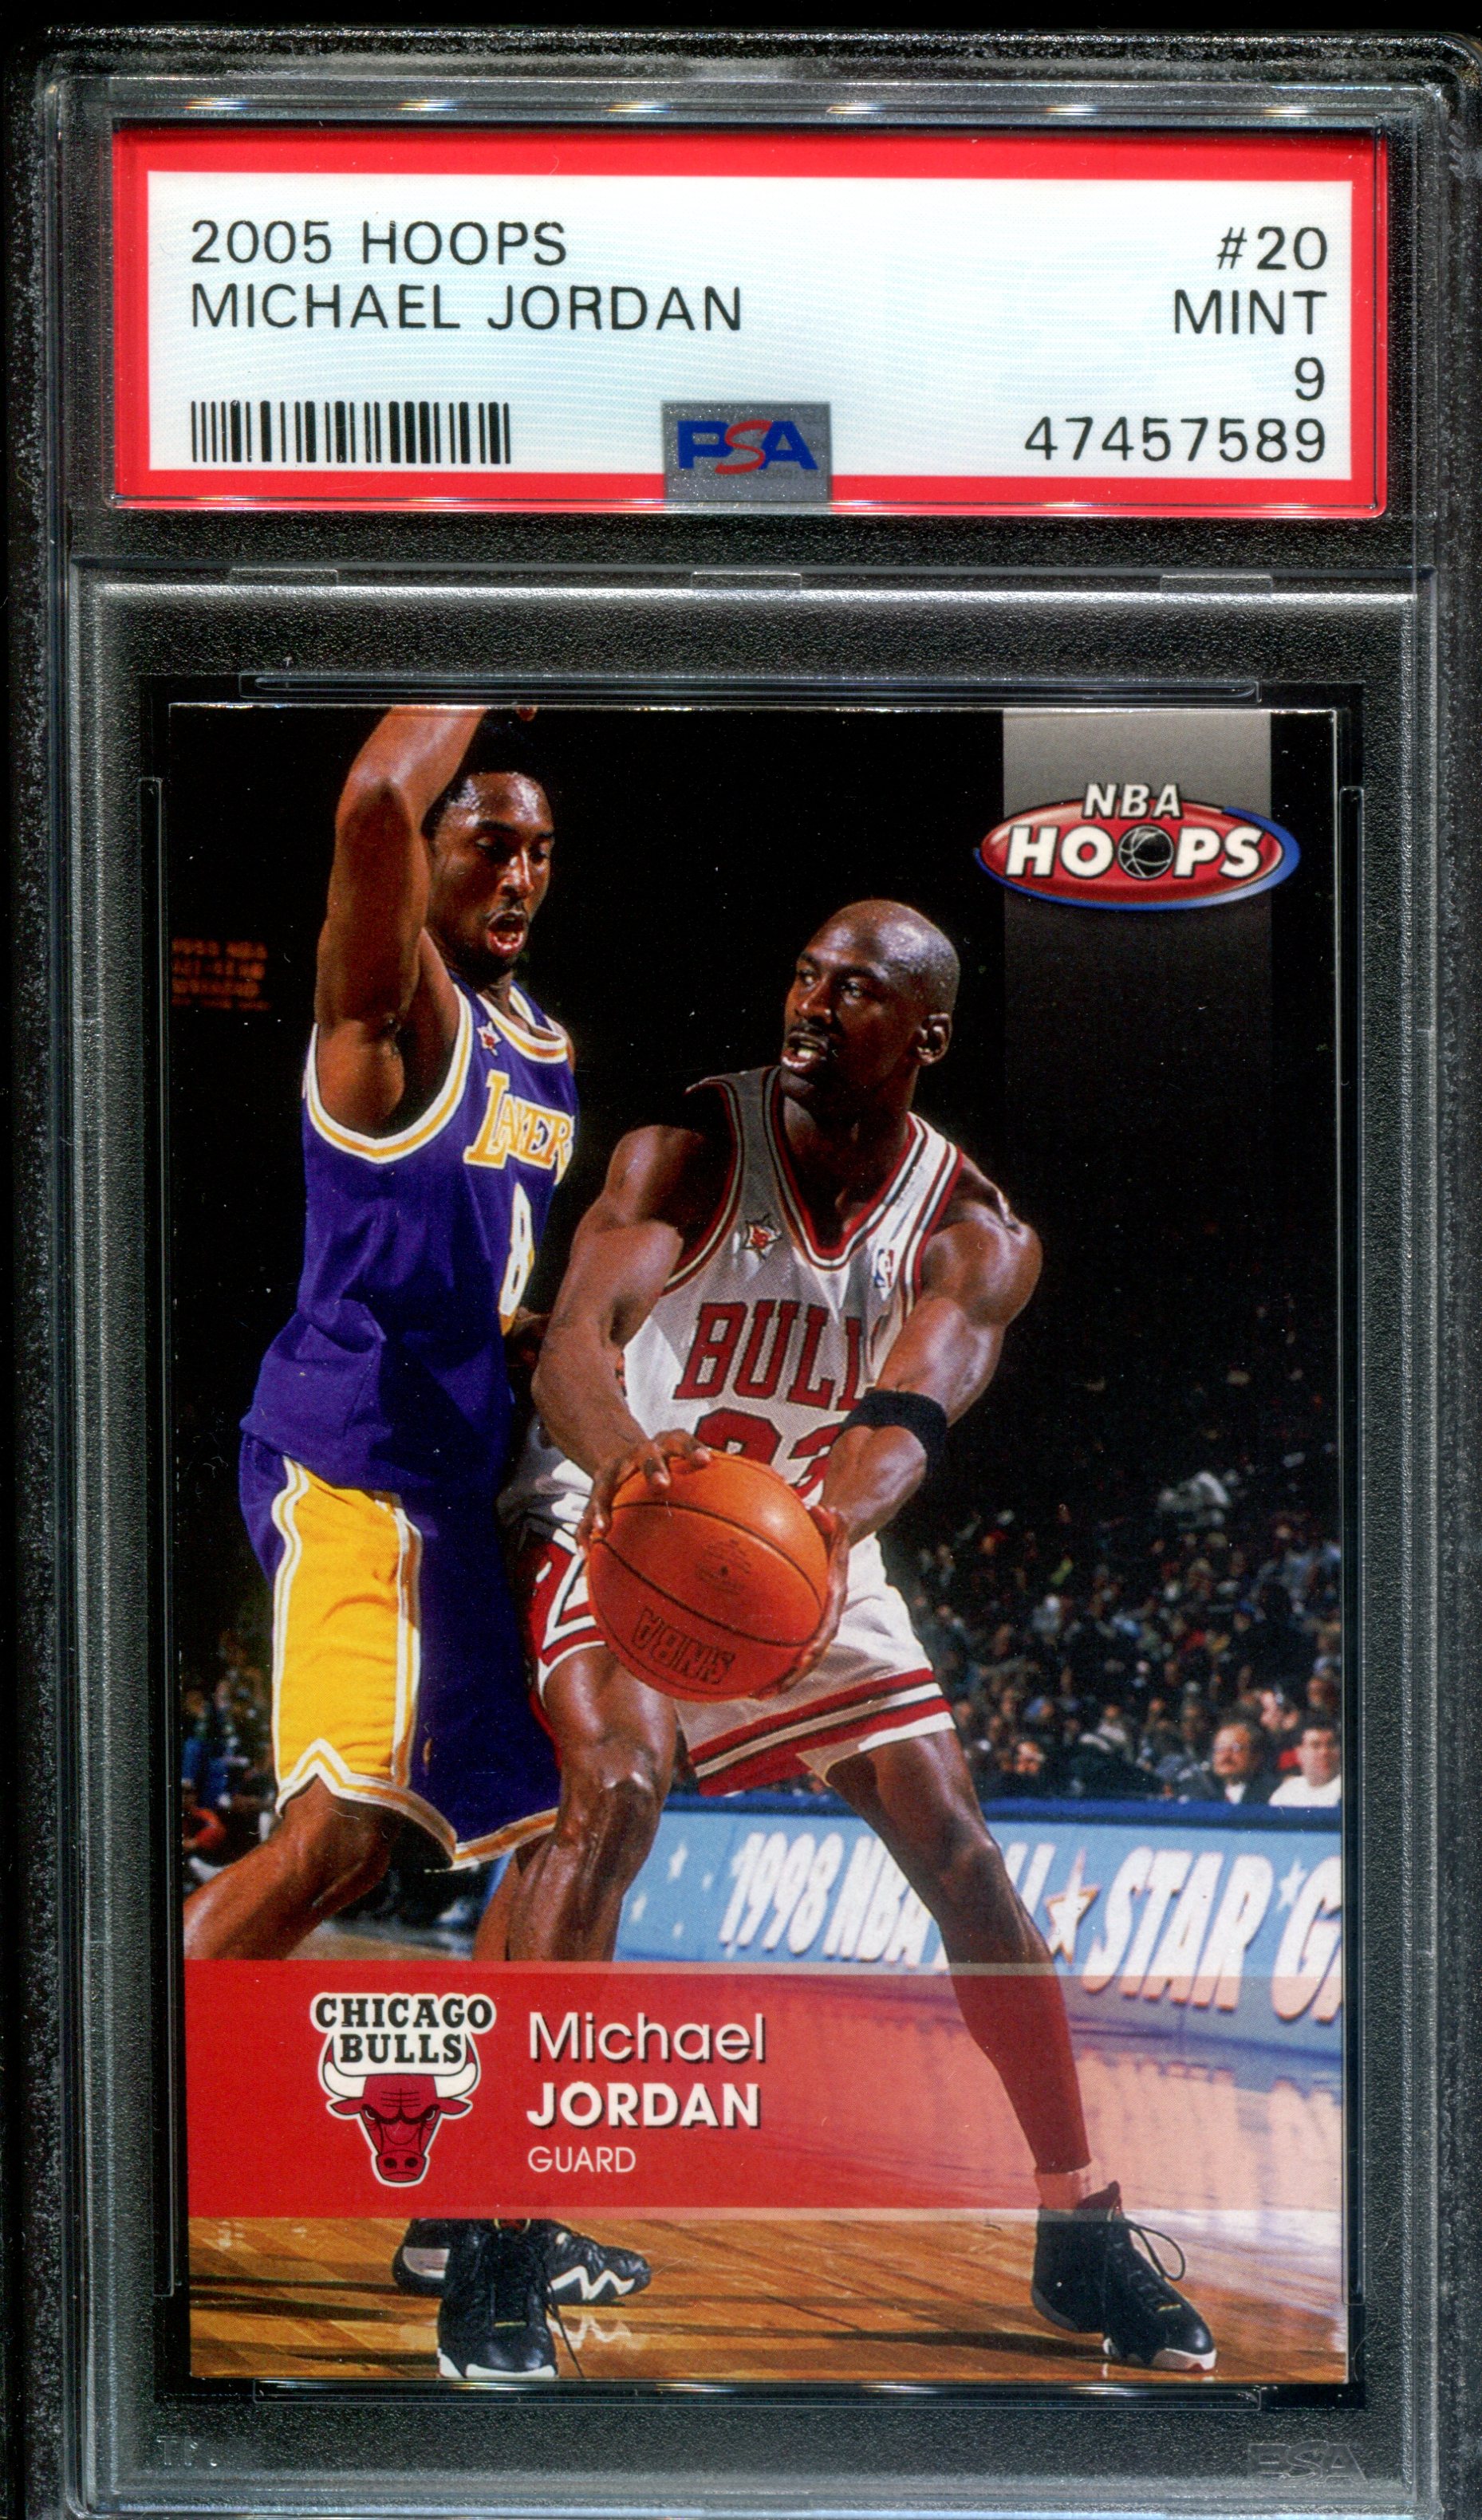 2005-06 Hoops #20 Michael Jordan - GRADED PSA 9 MINT (Kobe Bryant